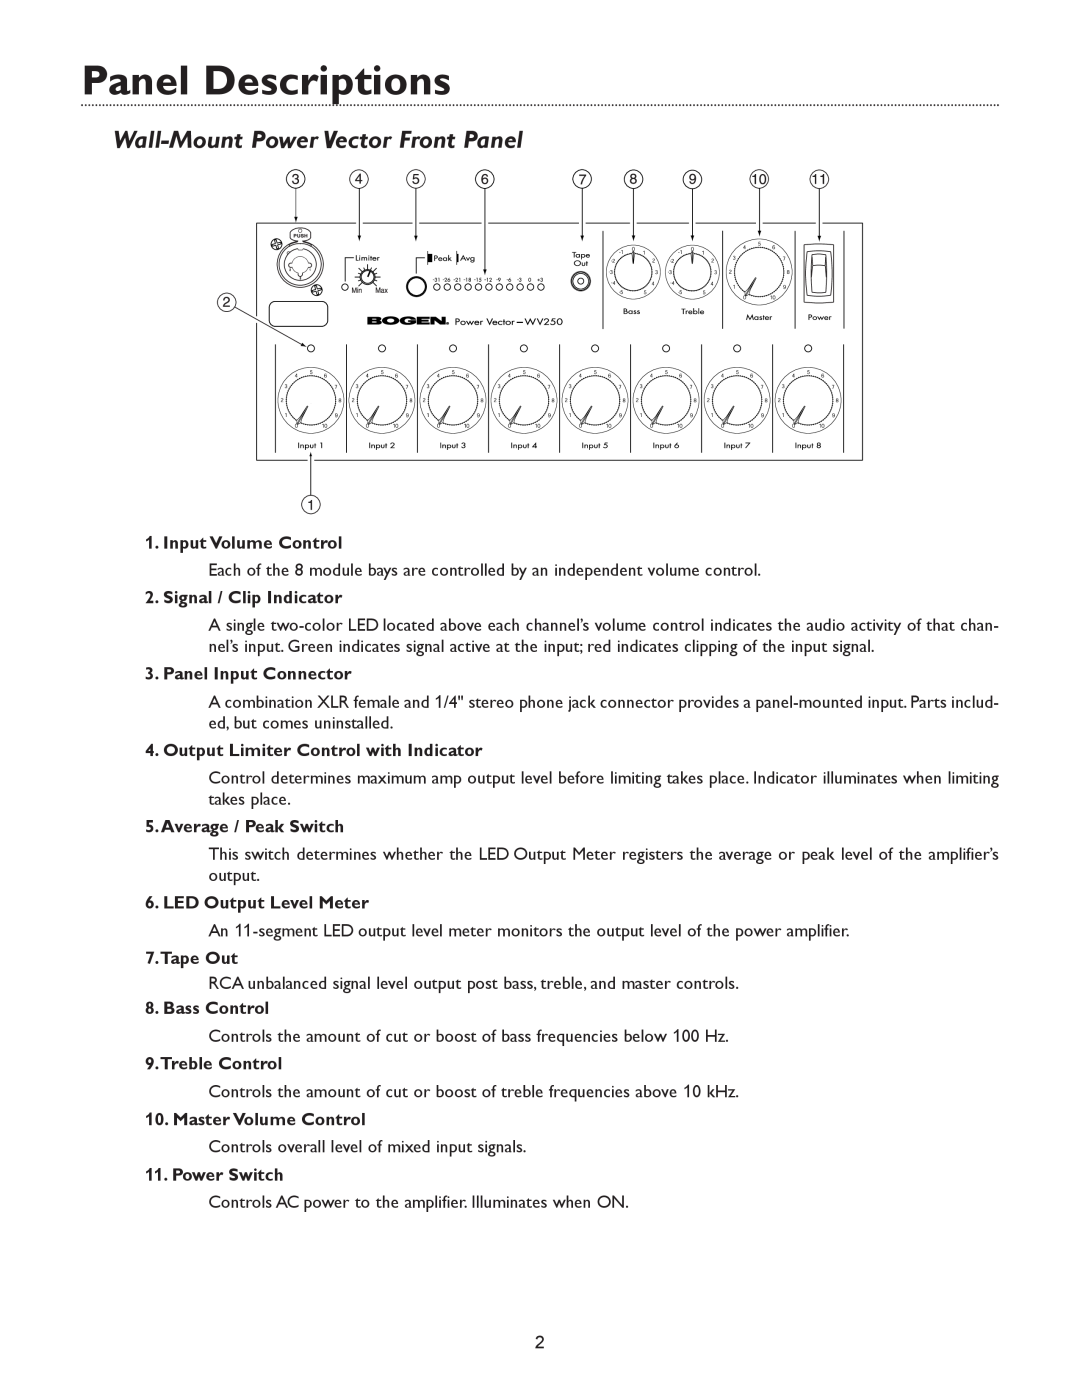 Bogen WV100, & WV250 Panel Descriptions, Wall-MountPower Vector Front Panel, Input Volume Control, Signal / Clip Indicator 